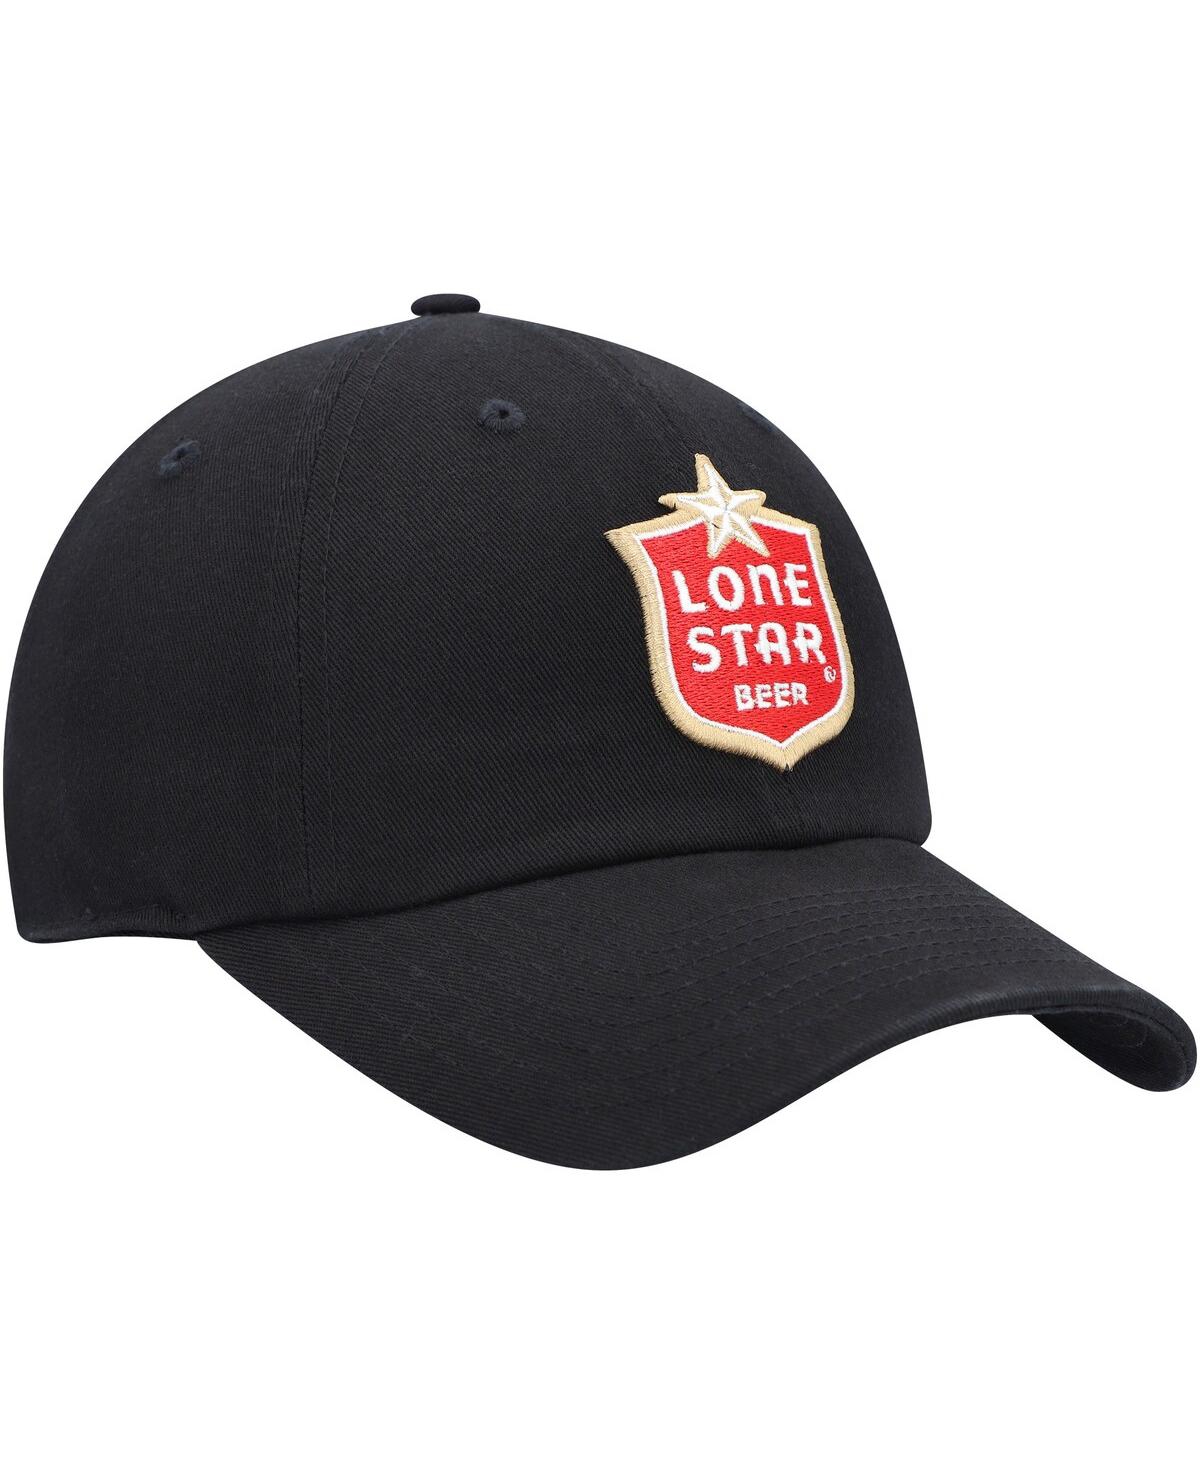 Shop American Needle Men's  Black Lone Star Beer Ballpark Adjustable Hat